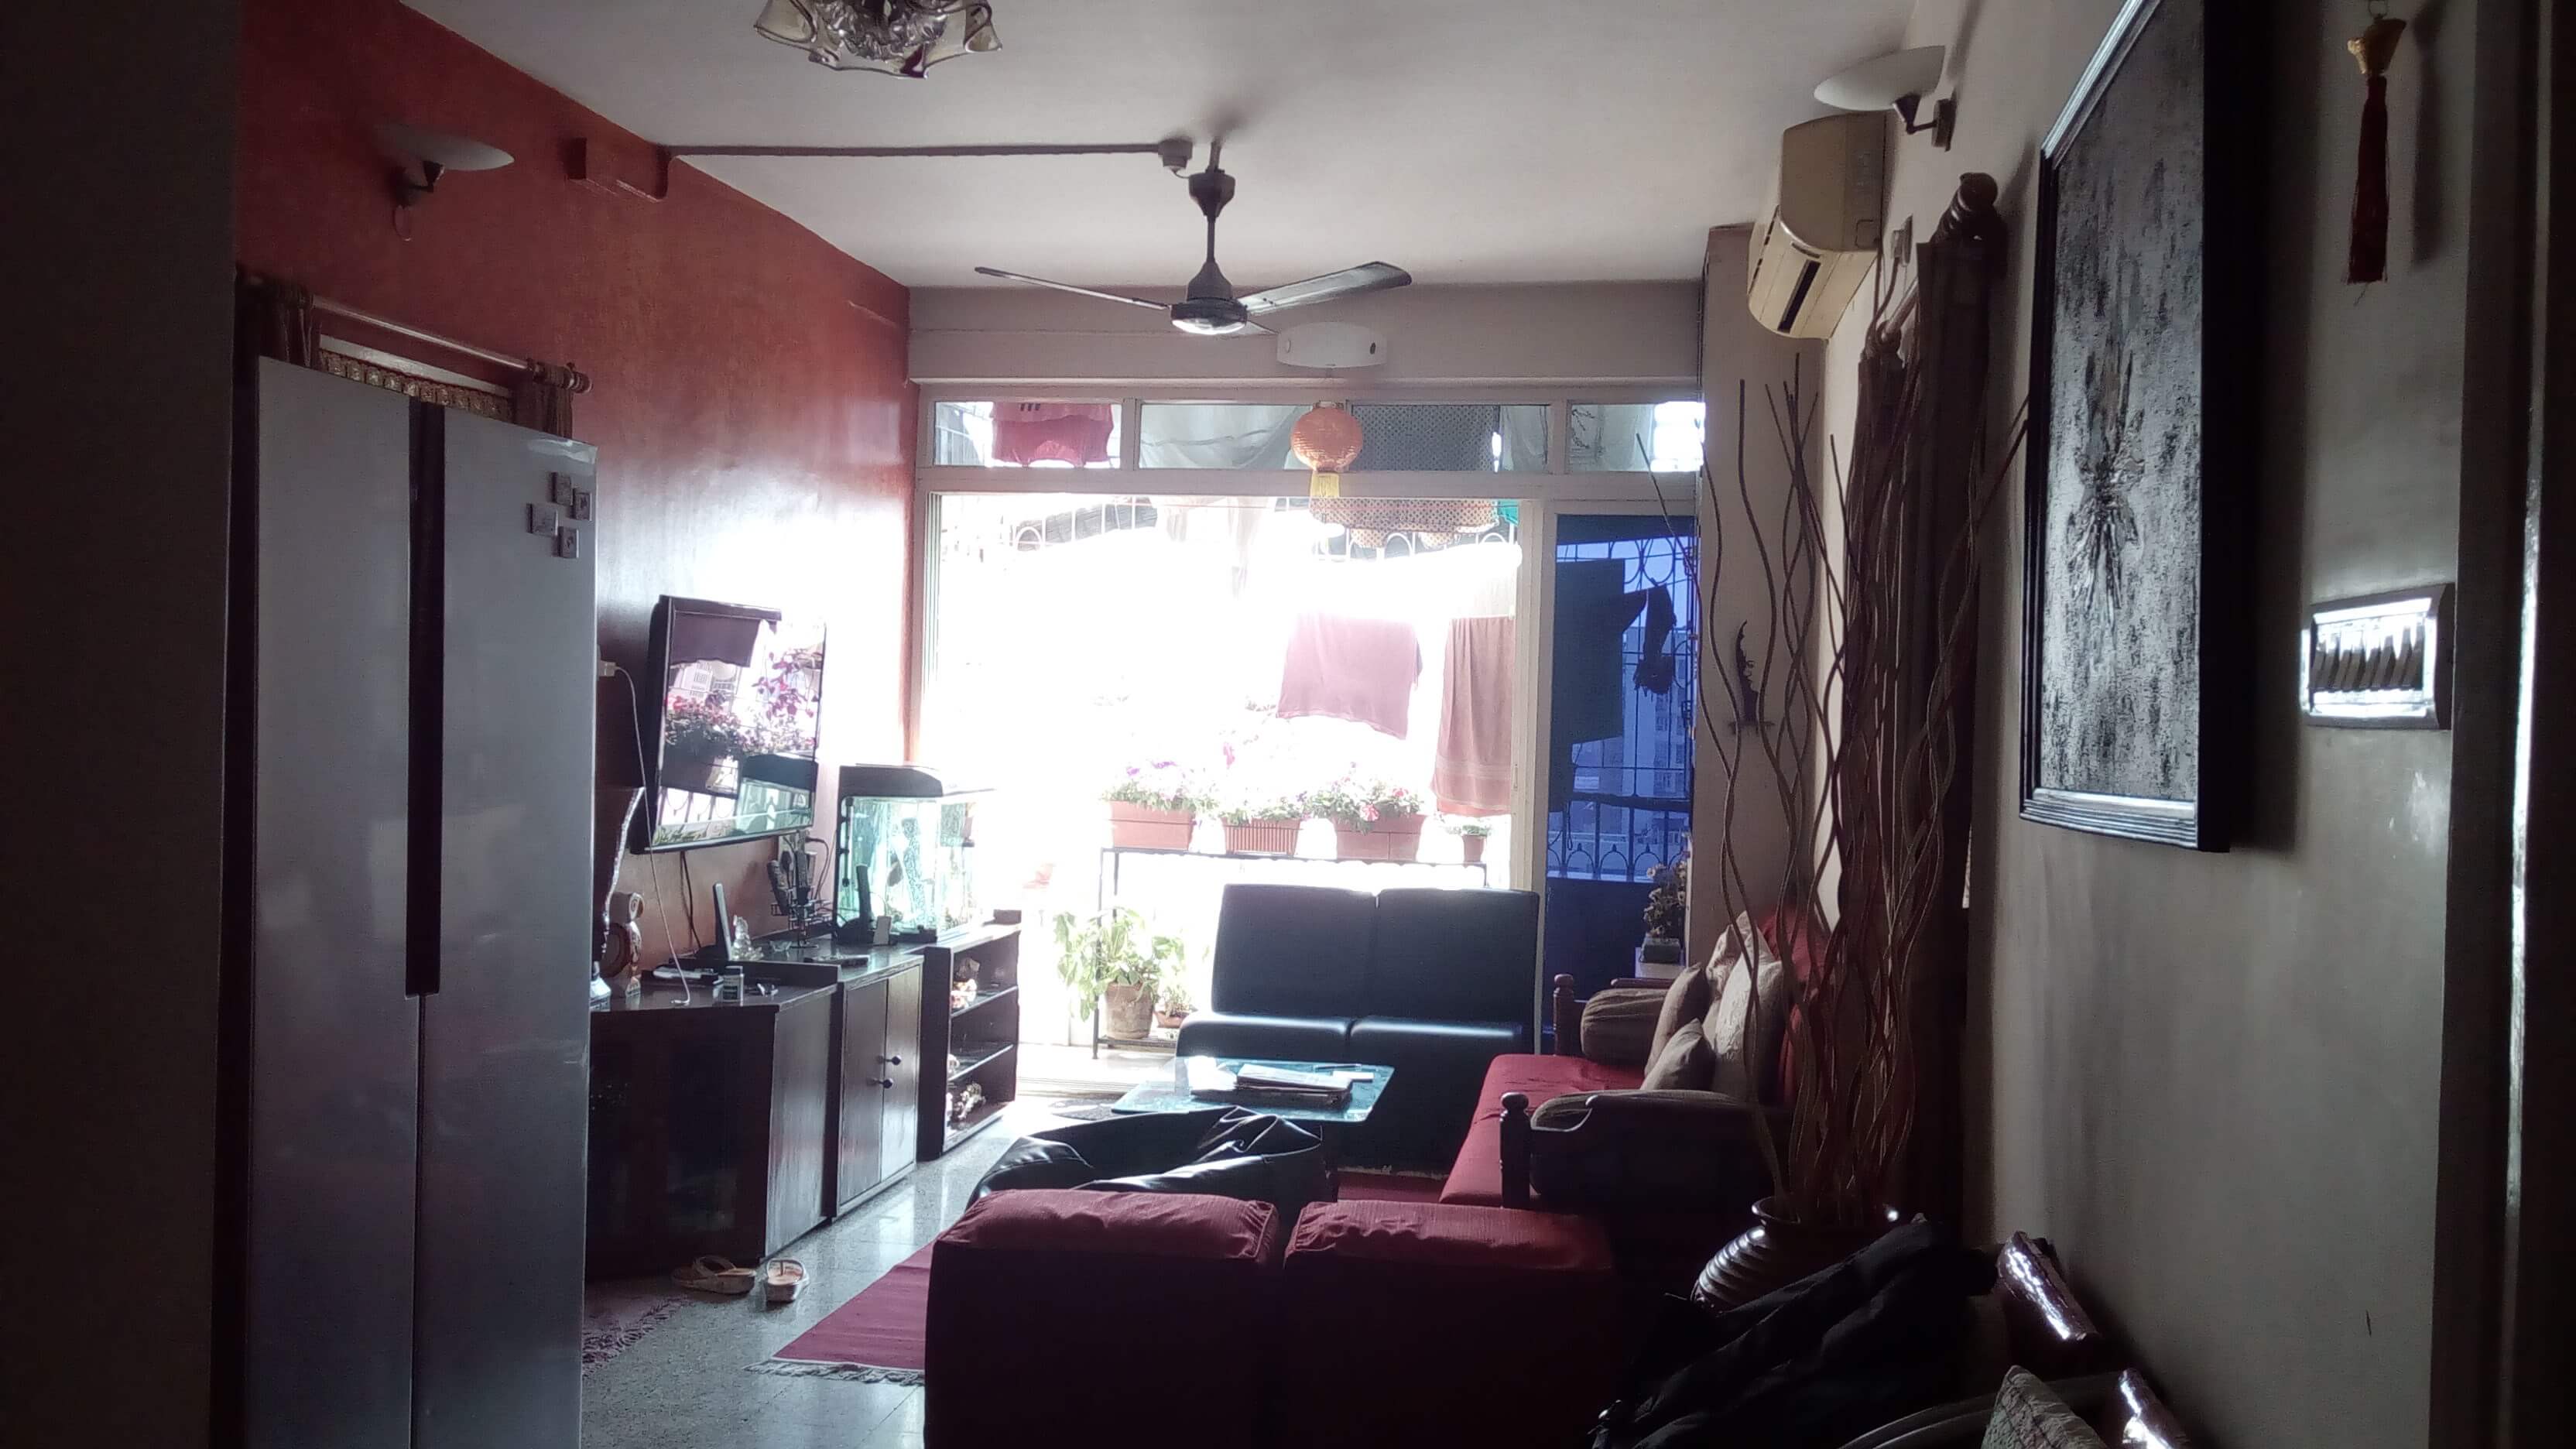 Flat For Sale in Gariahat,Kolkata (Id:22160)